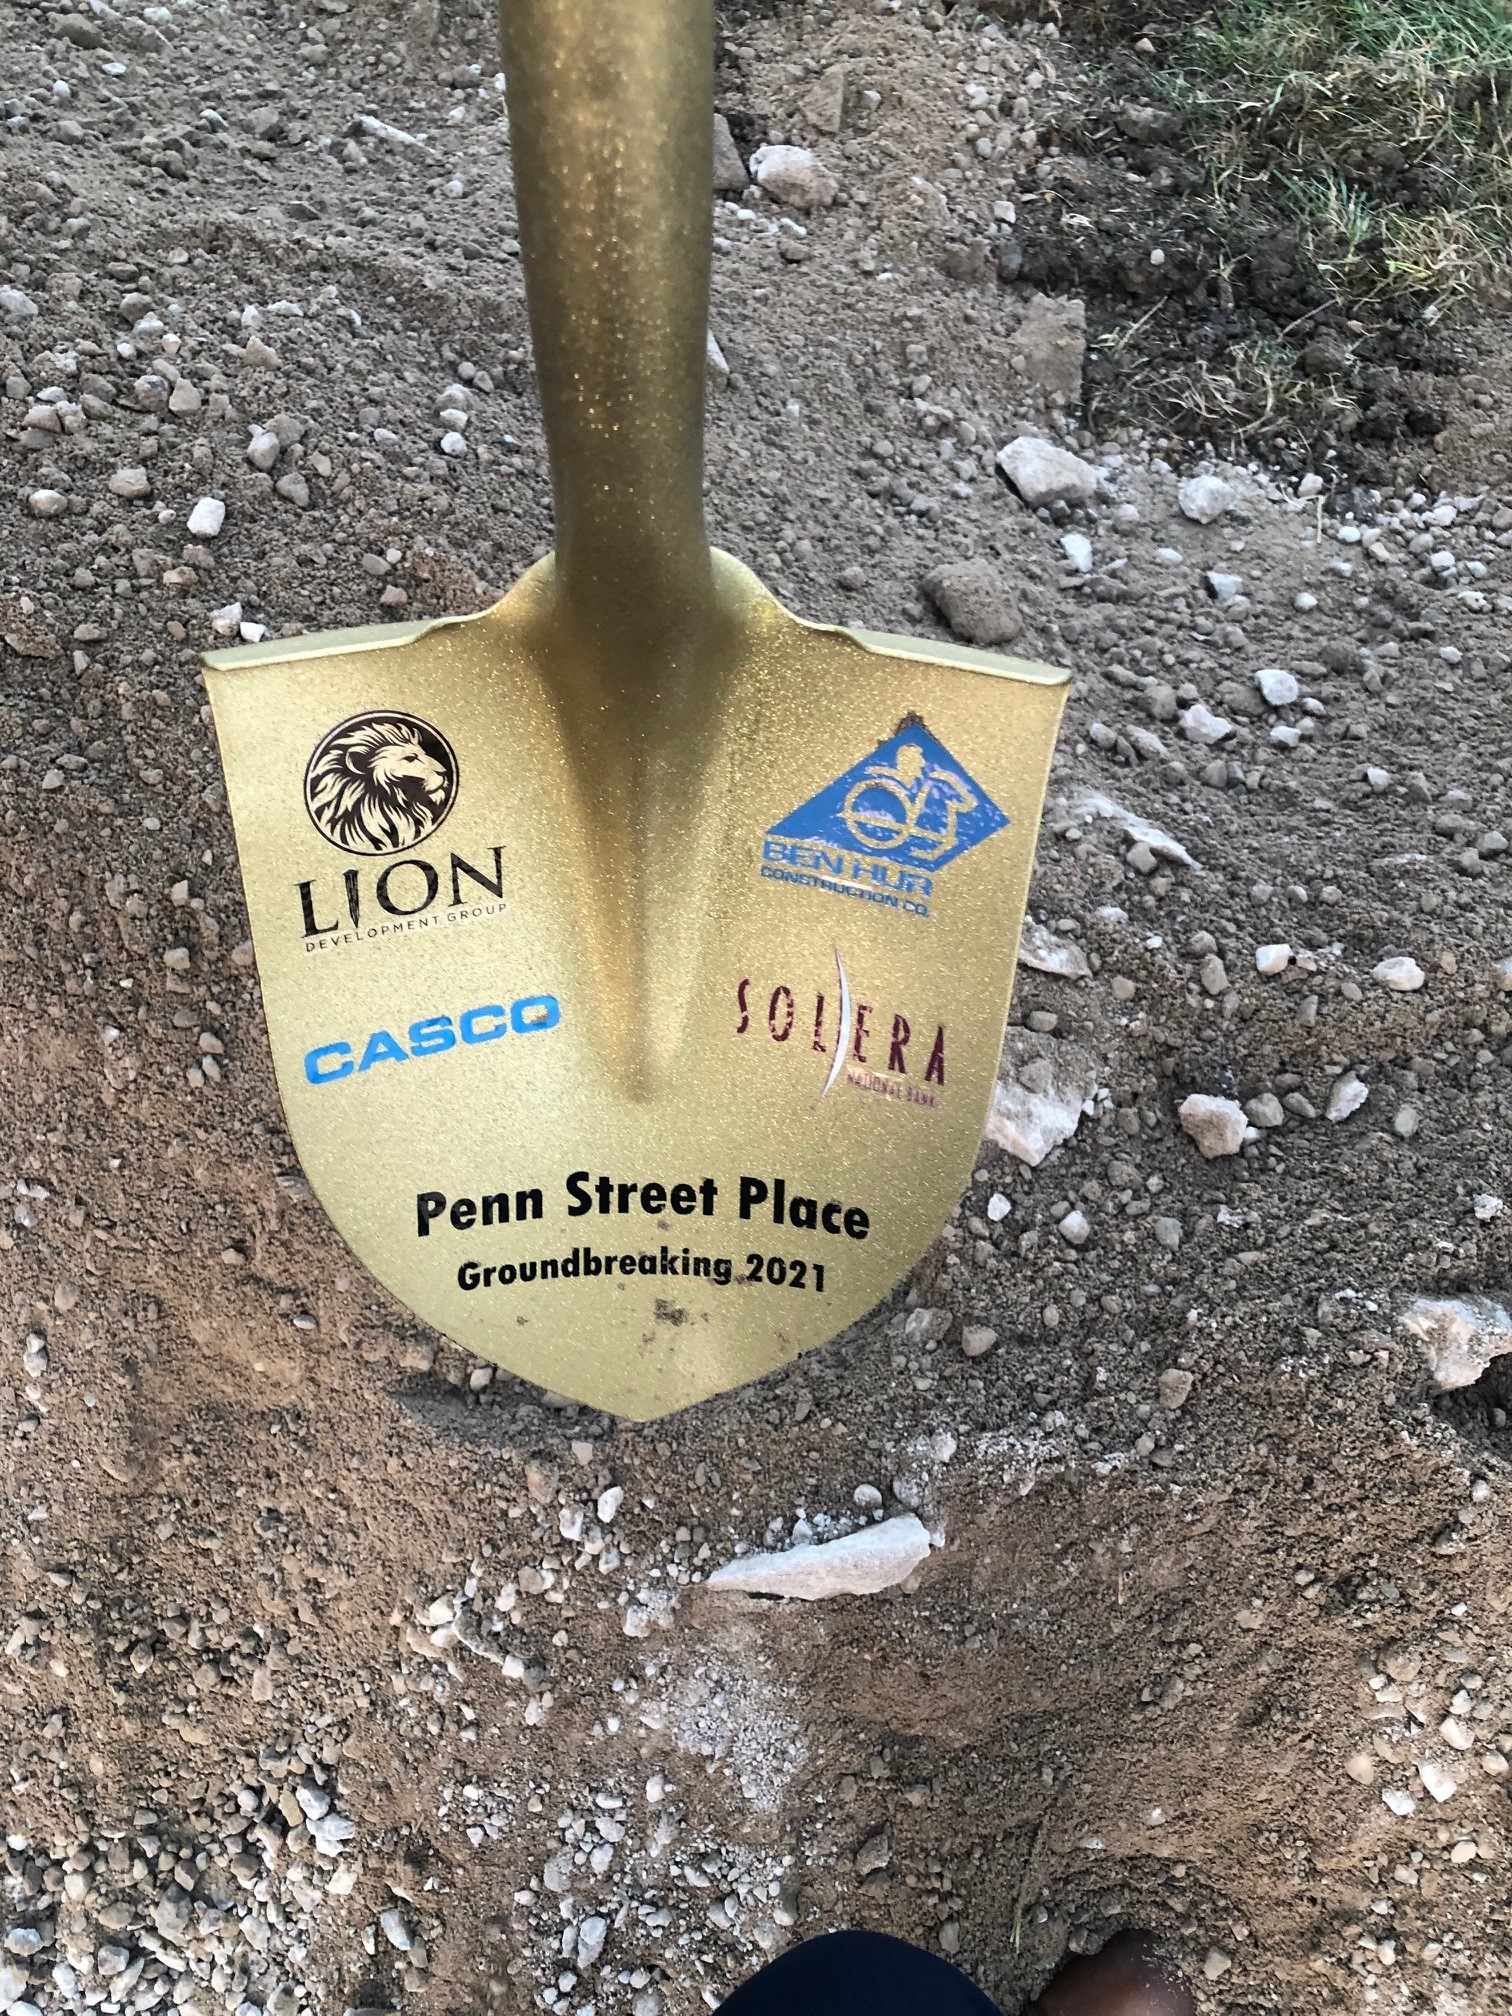 Penn Street Place Groundbreaking shovel with each company logo